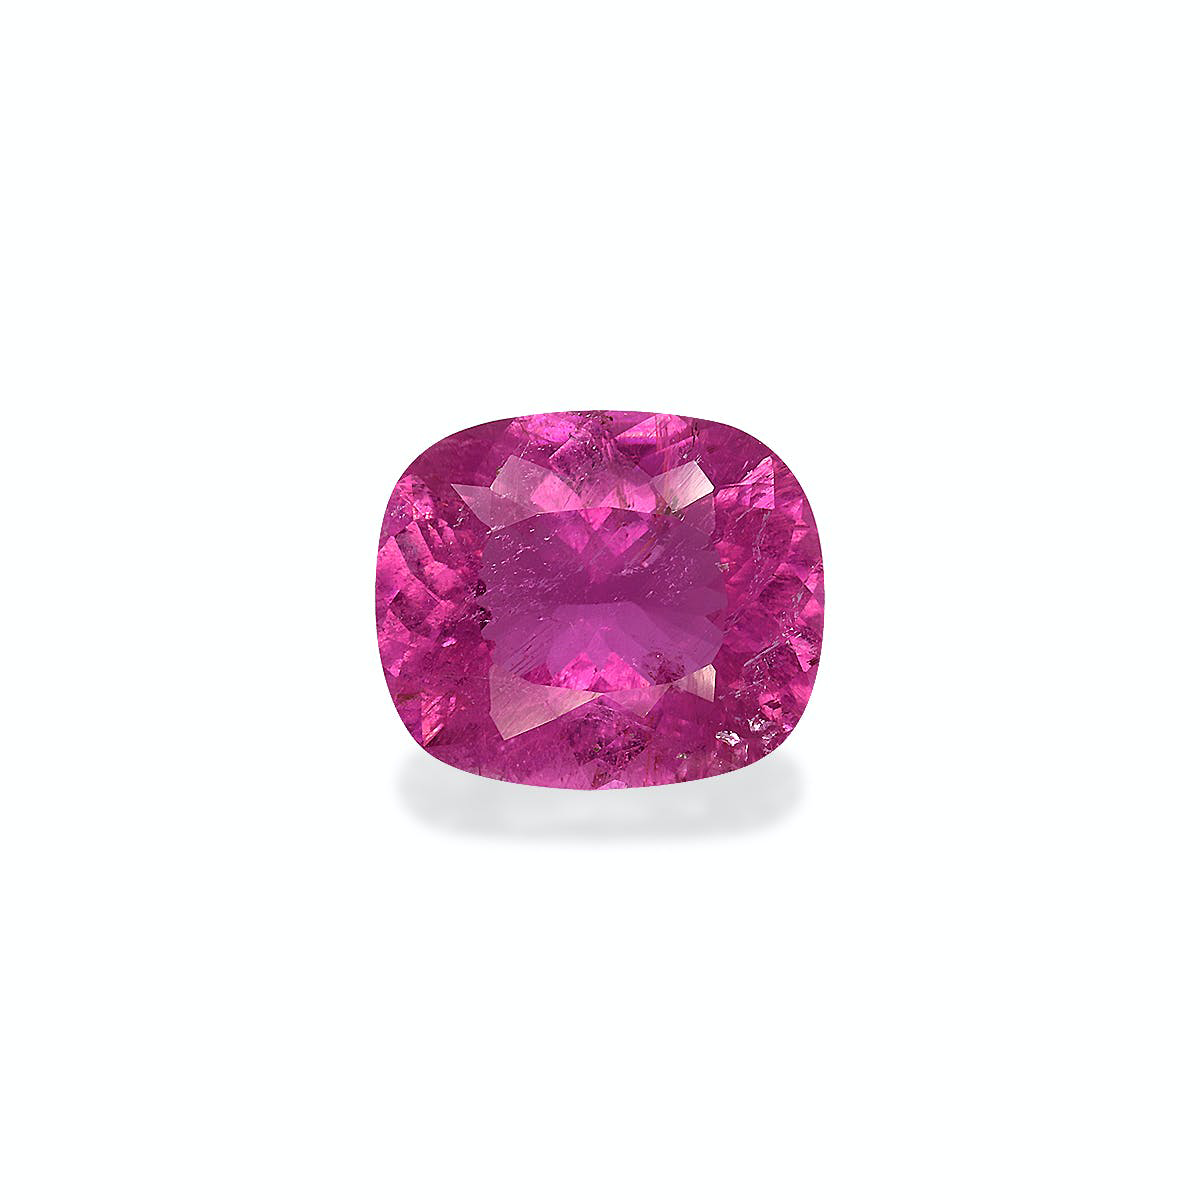 Picture of Fuscia Pink Rubellite Tourmaline 6.71ct - 13x11mm (RL0891)